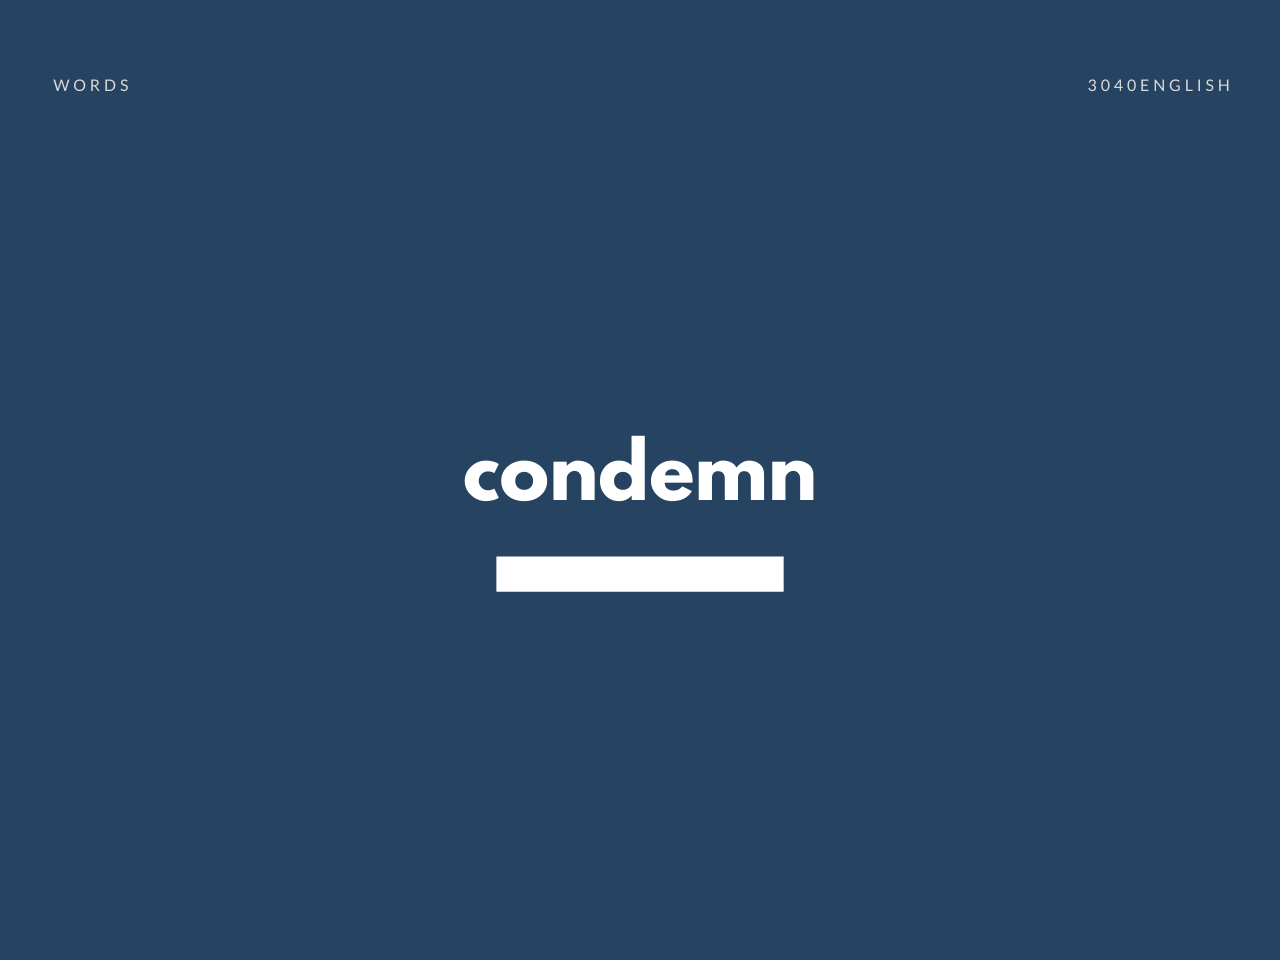 Condemn の意味と簡単な使い方 音読用例文あり